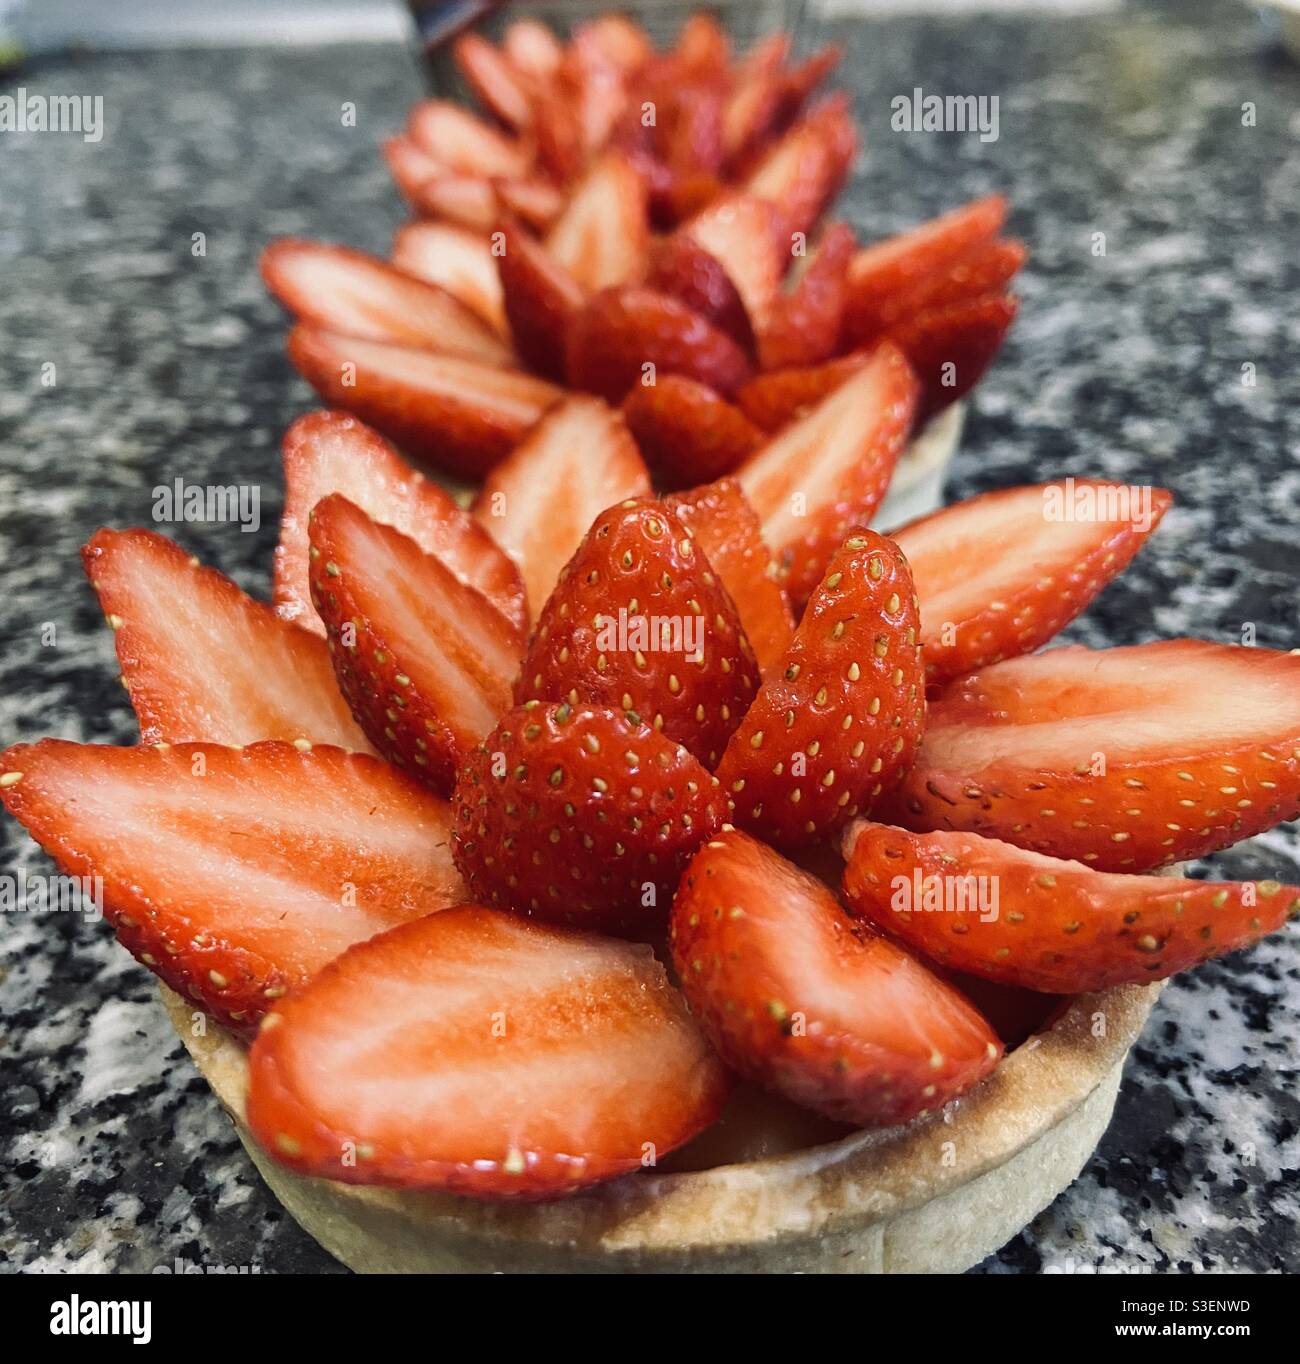 Tarte aux fraises Stock Photo - Alamy